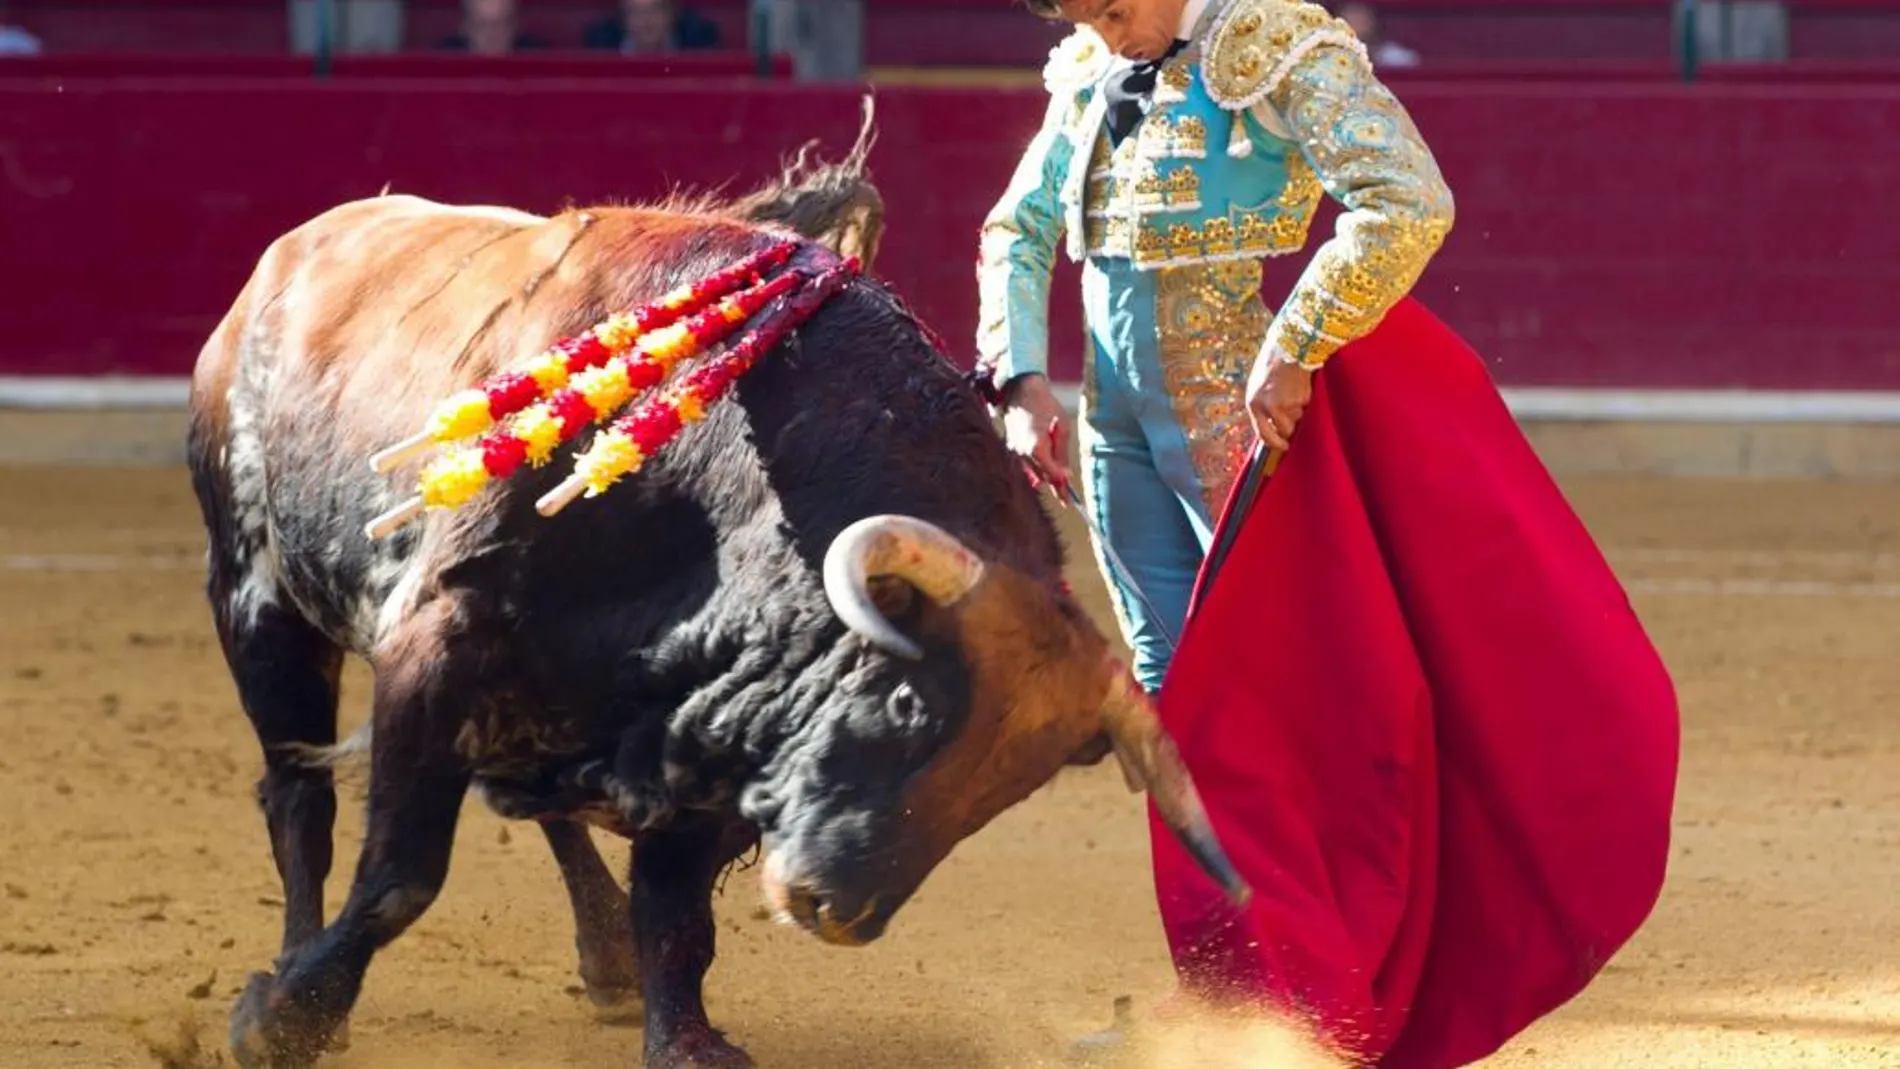 Curro Díaz toreando en la feria de San Jorge de Zaragoza